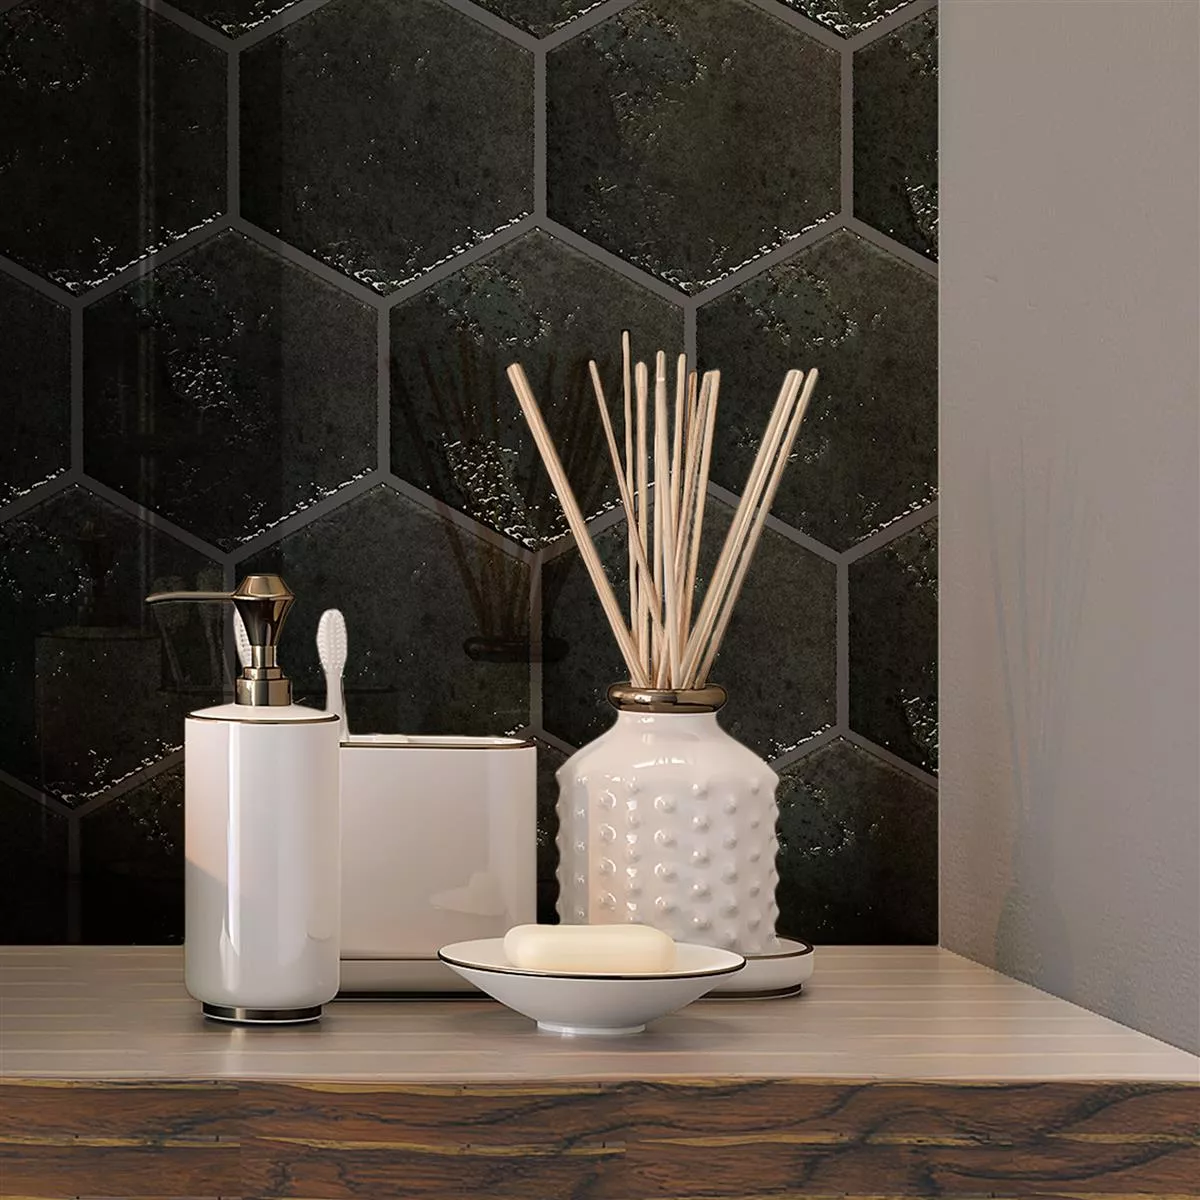 Sample Wall Tiles Lara Glossy Waved 13x15cm Hexagon Black